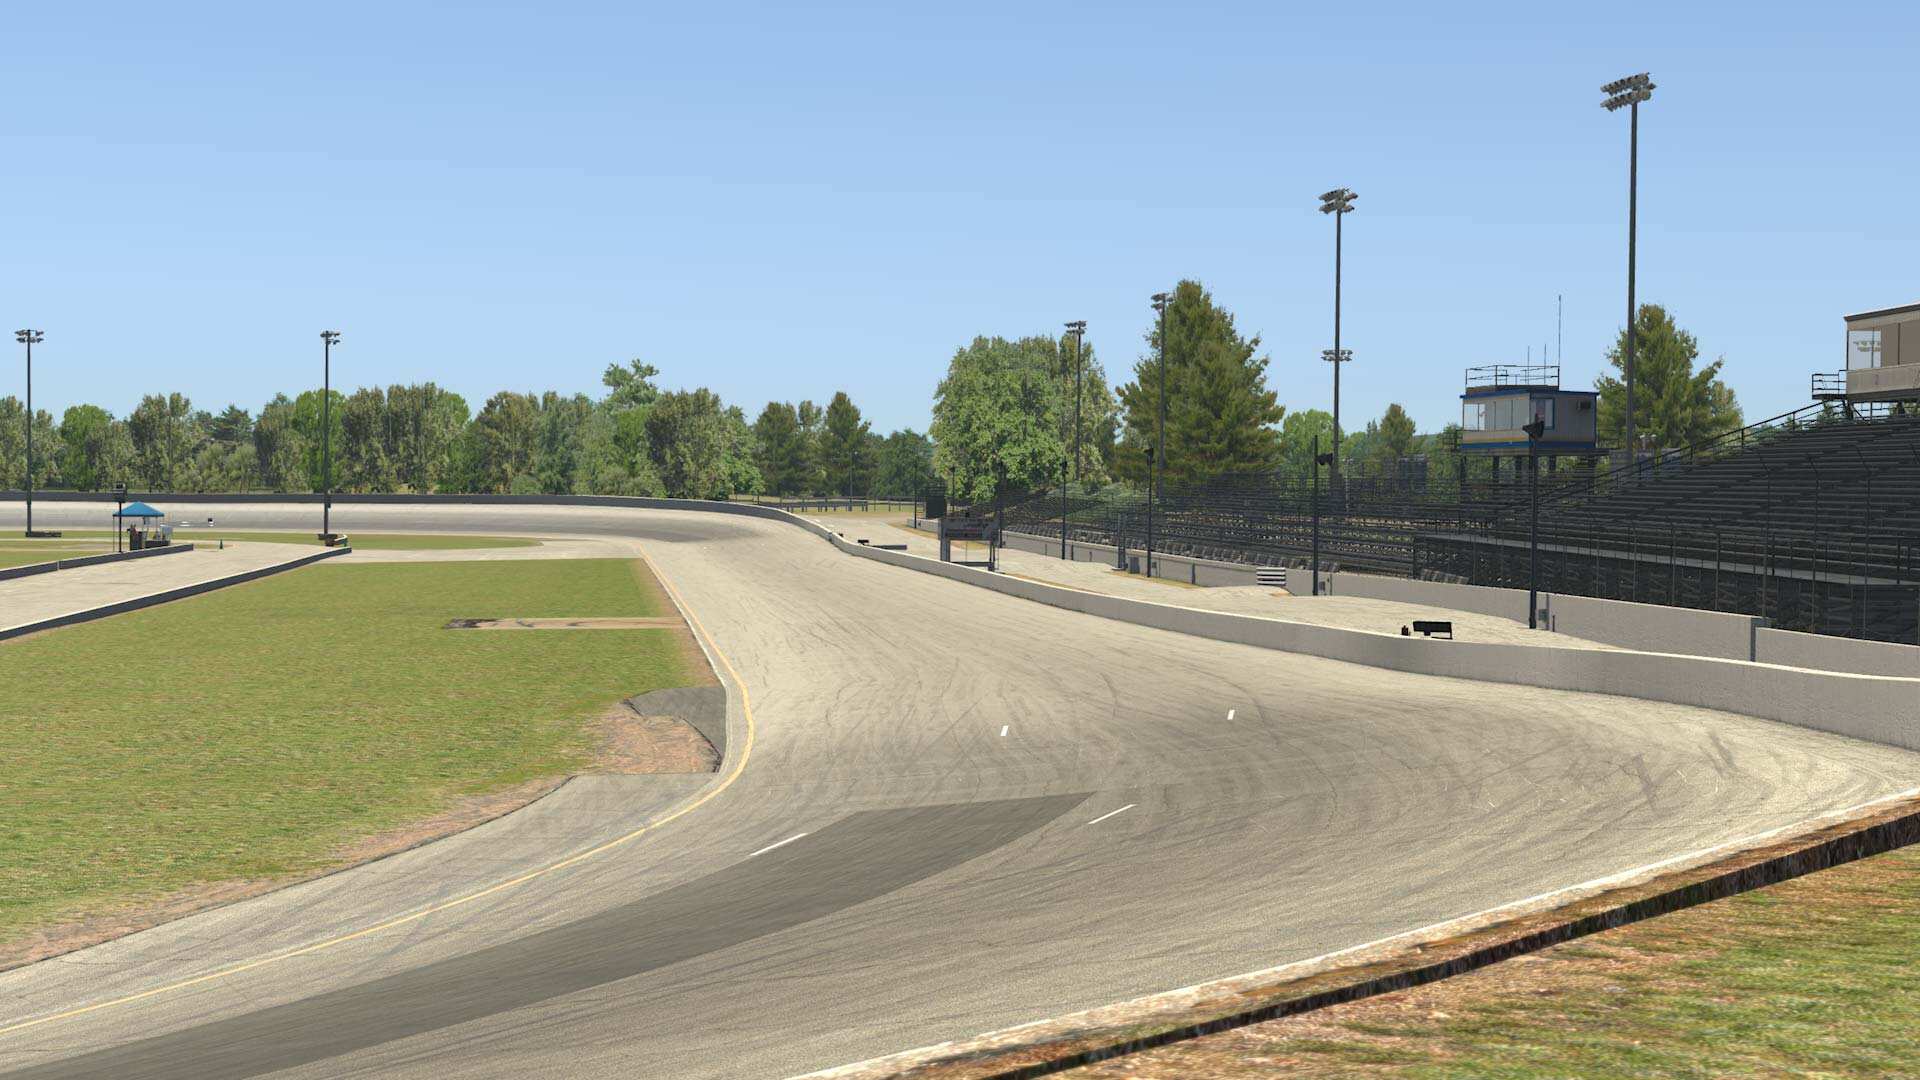 Thompson Speedway Motorsports Park